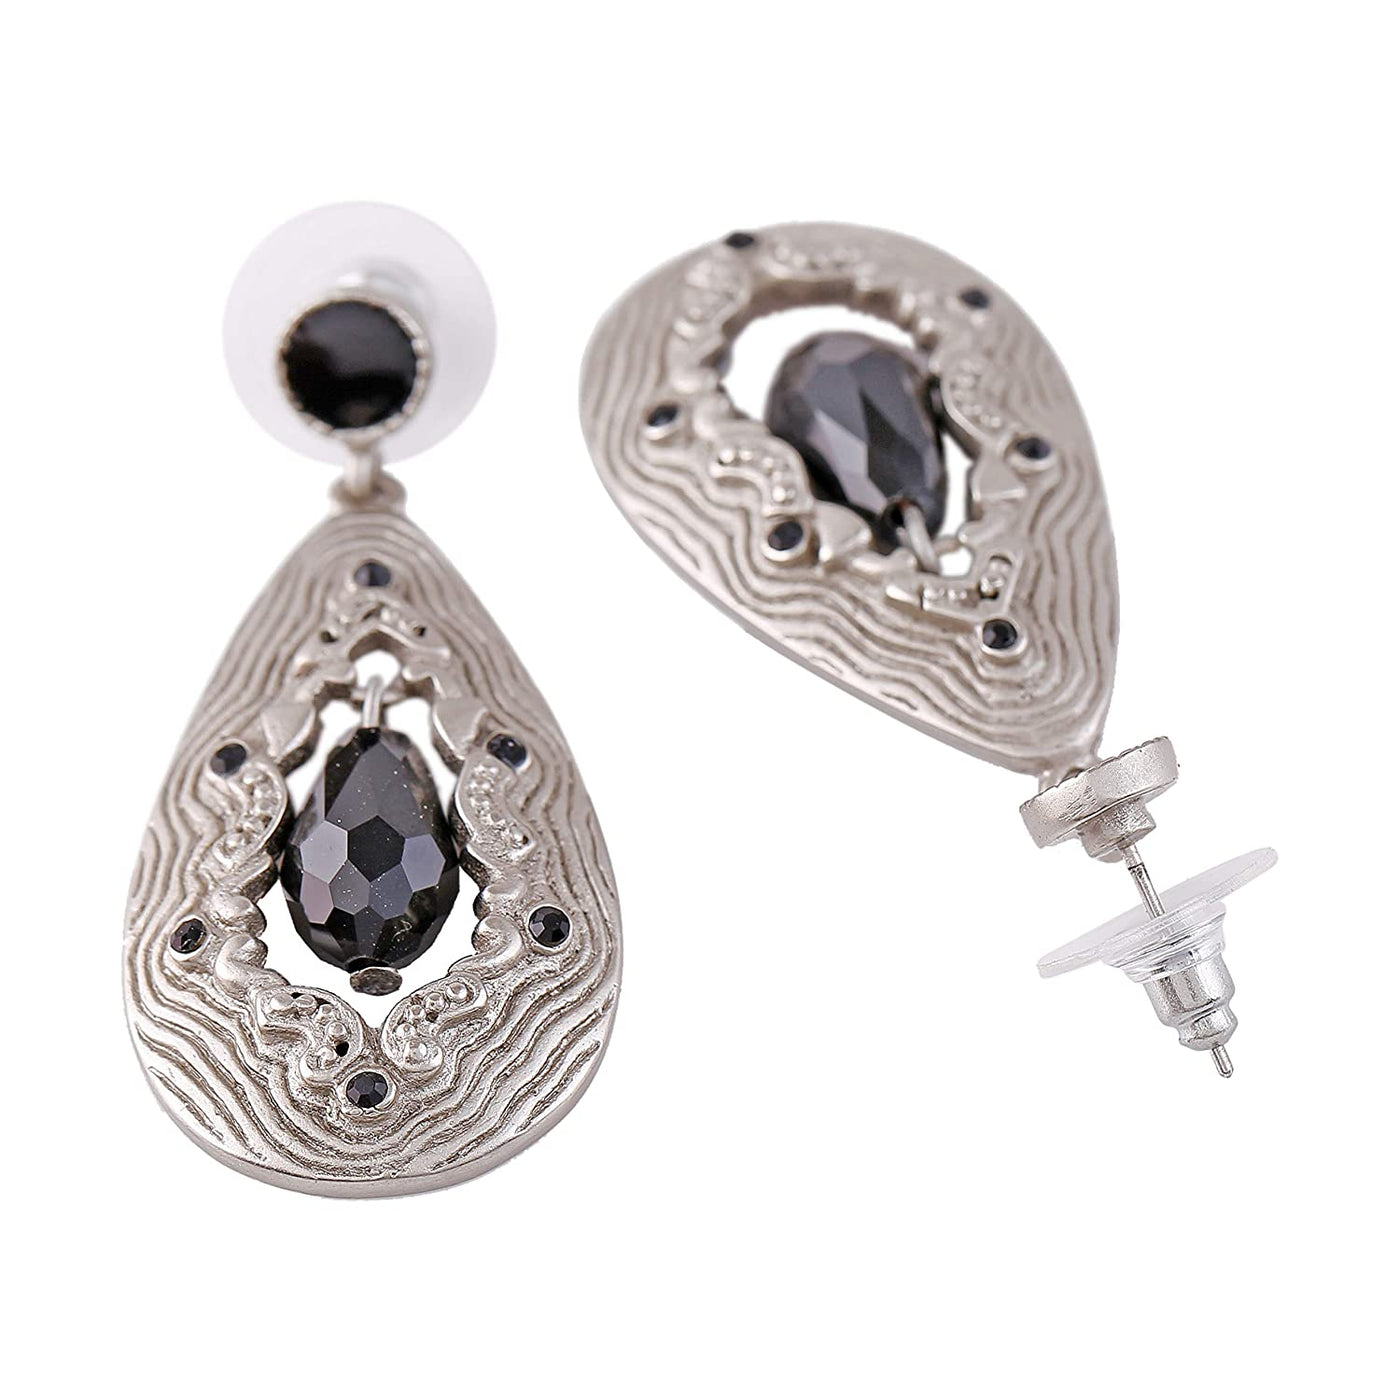 Estele Oxidized Silver Plated Designer Grand canyon drop Dangle Earrings